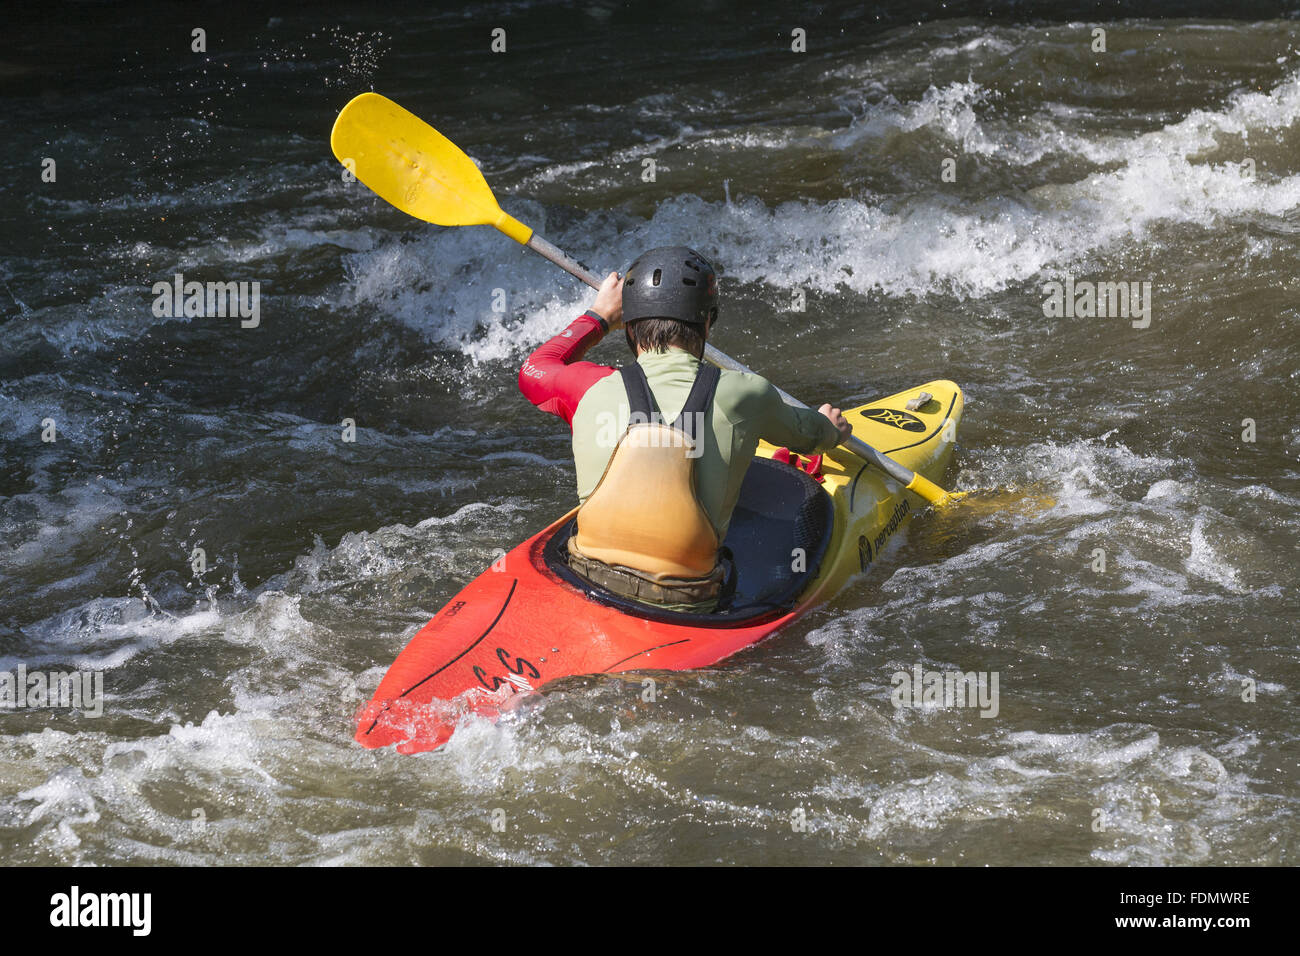 Il Rafting sul fiume Paranhana - canoeist giù rapide Foto Stock